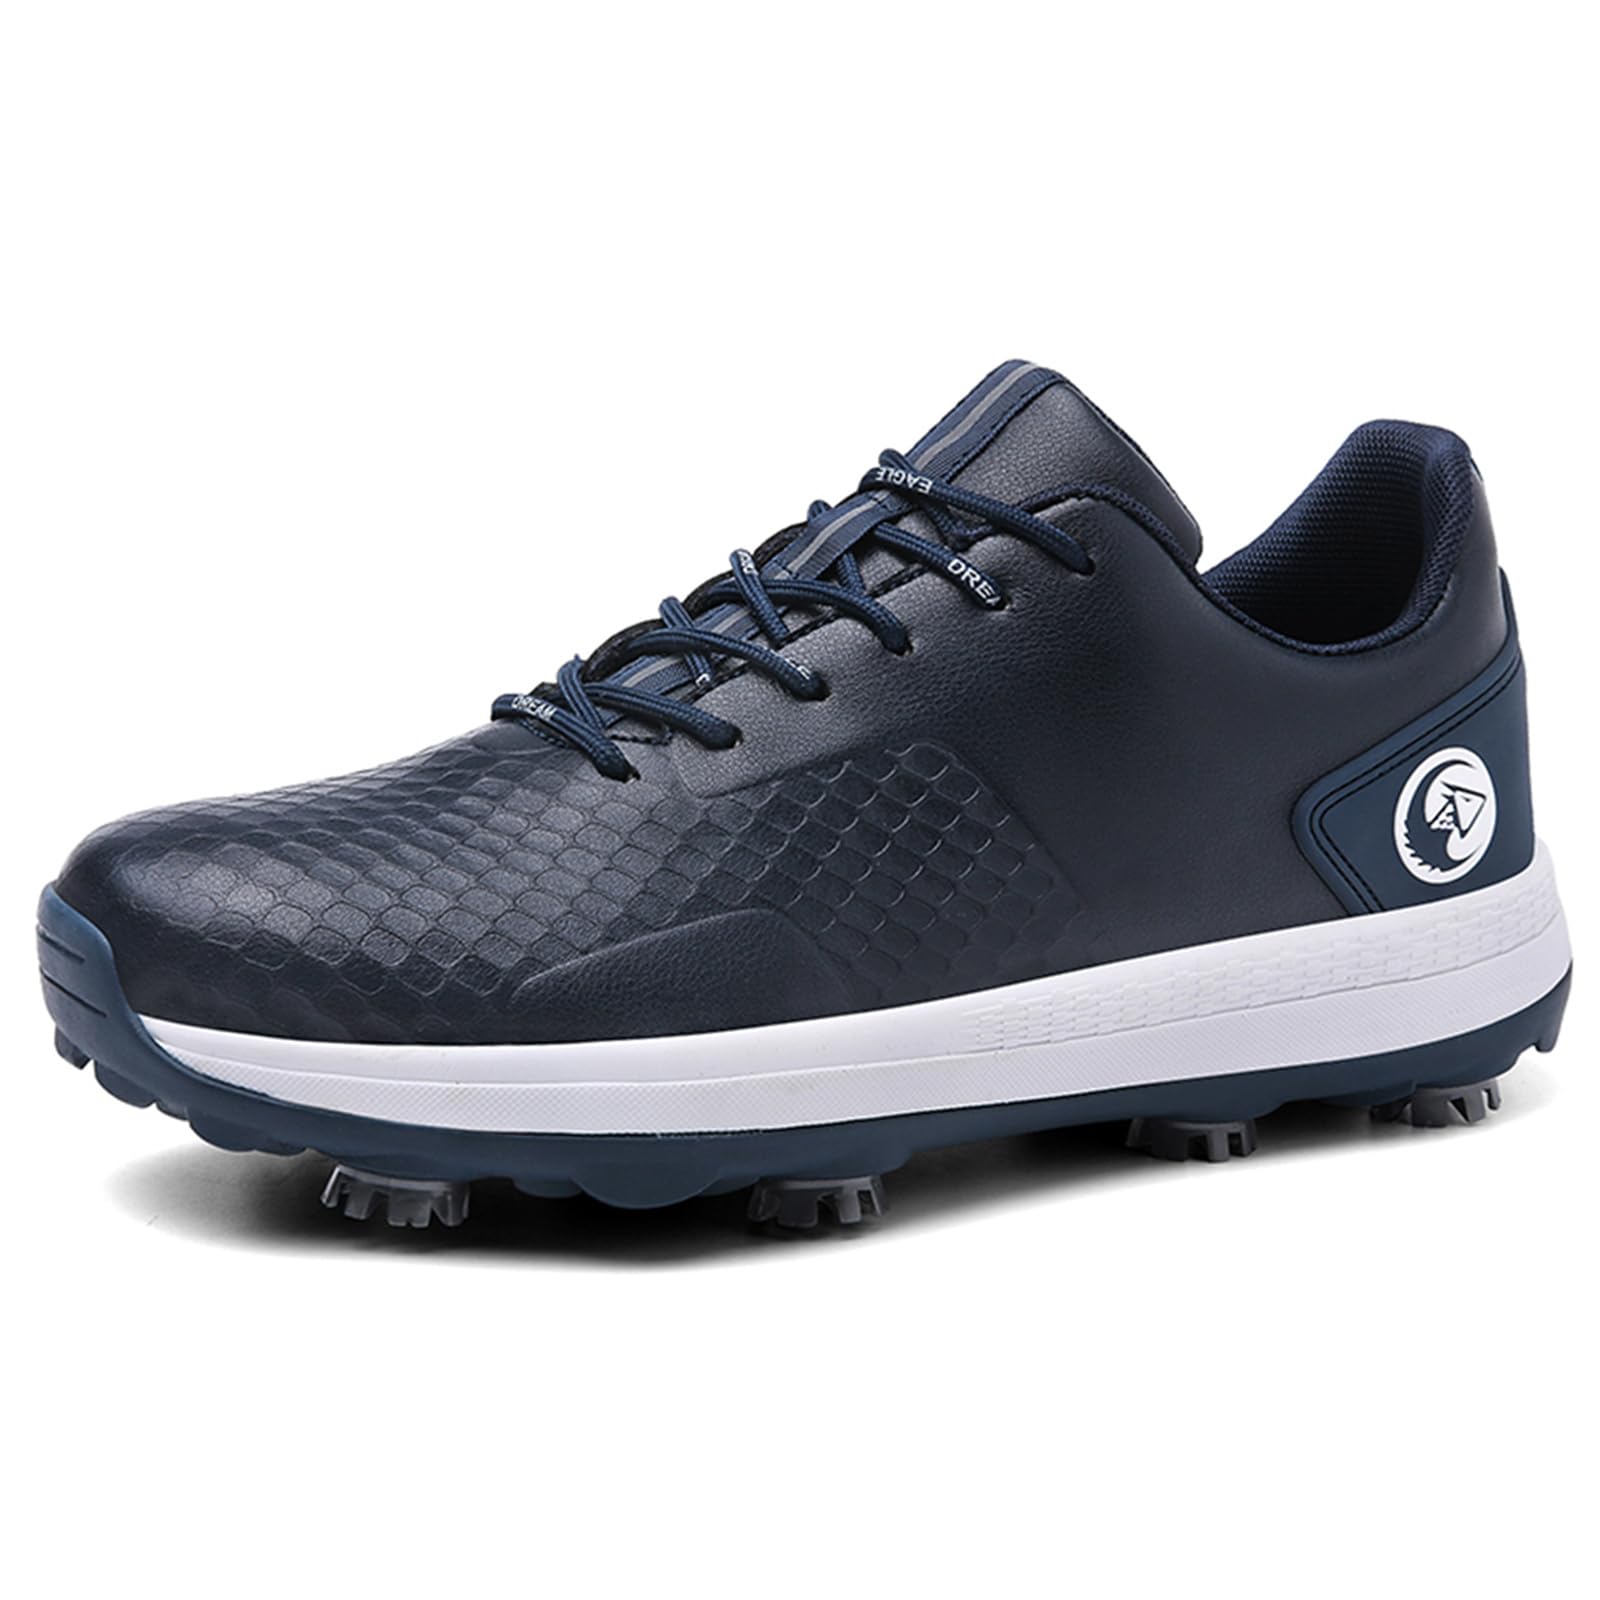 NGARY Golfschuhe für Herren mit 8 Golf Spikes Atmungsaktive Leichte Golf Sport Luftgepolsterte Schuhe Turnschuhe Bequeme,Blau,42 EU